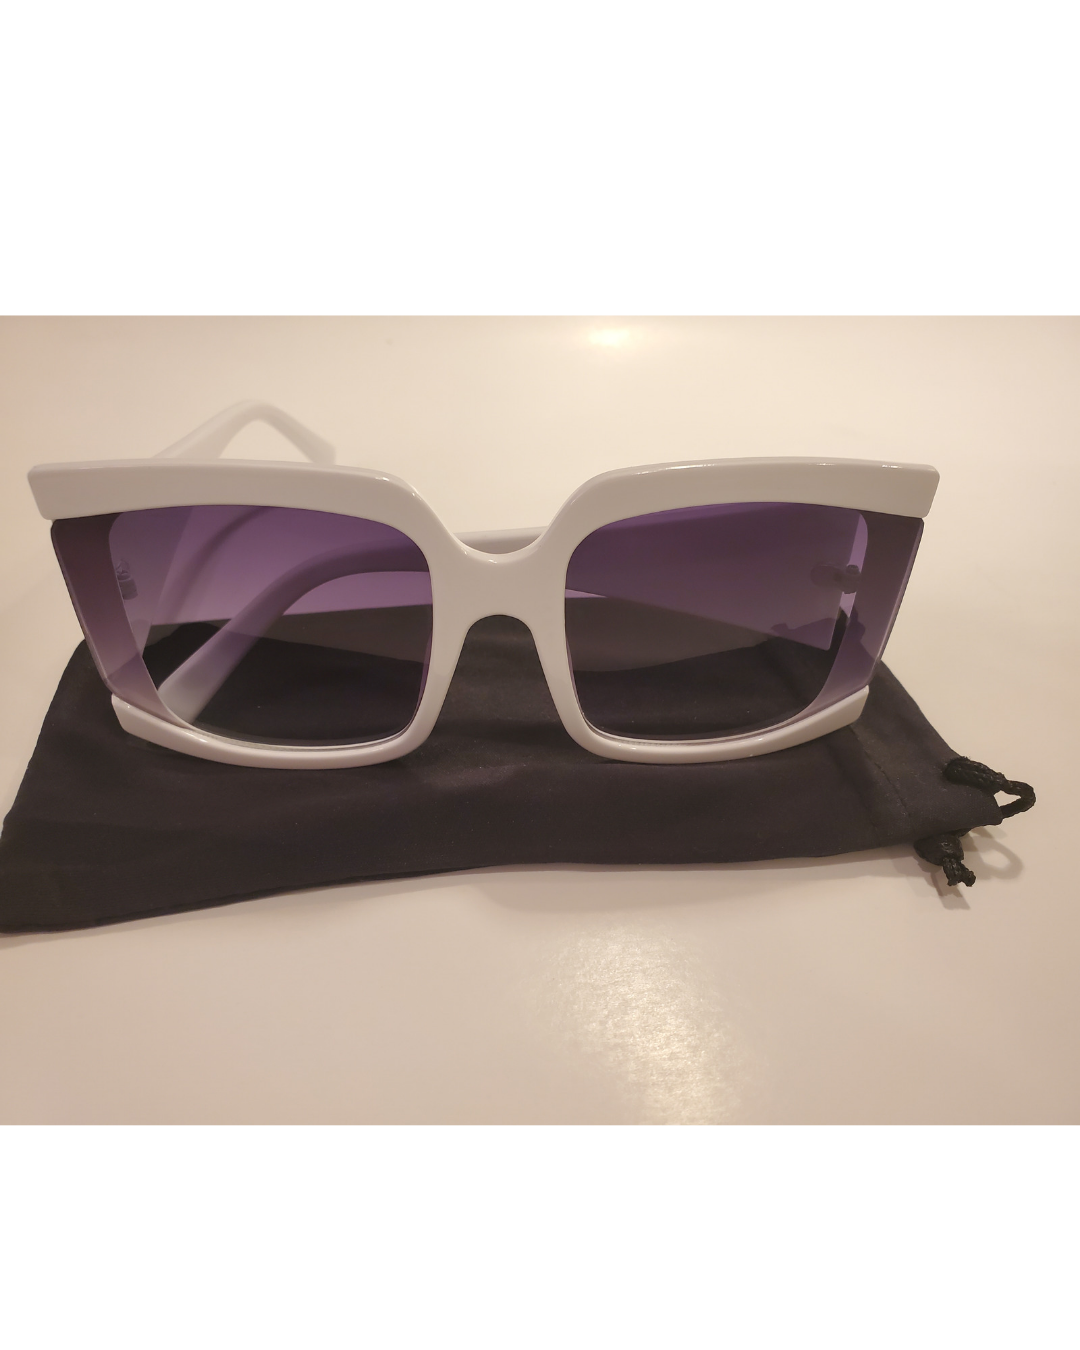 image of white sunglasses